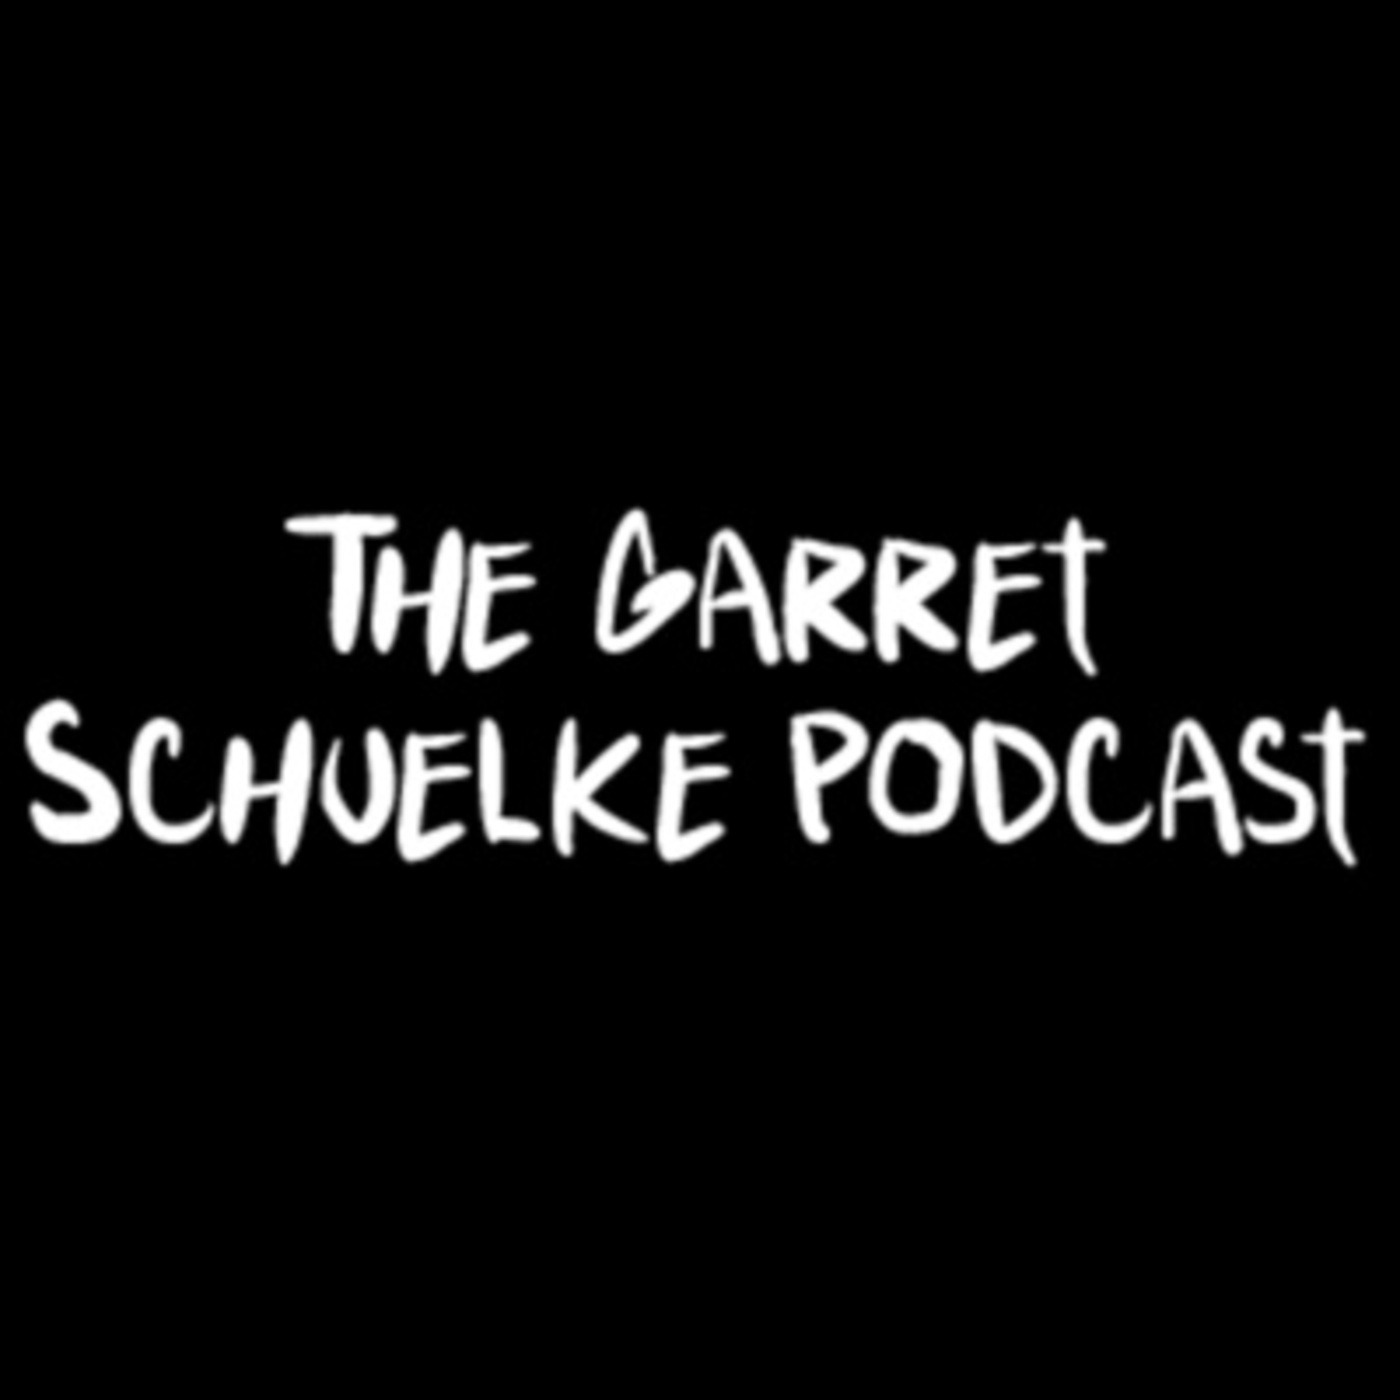 The Garret Schuelke Podcast Episode 63: AmeriKKKa Sucks! with Zach Elmblad and Anthony Cumia